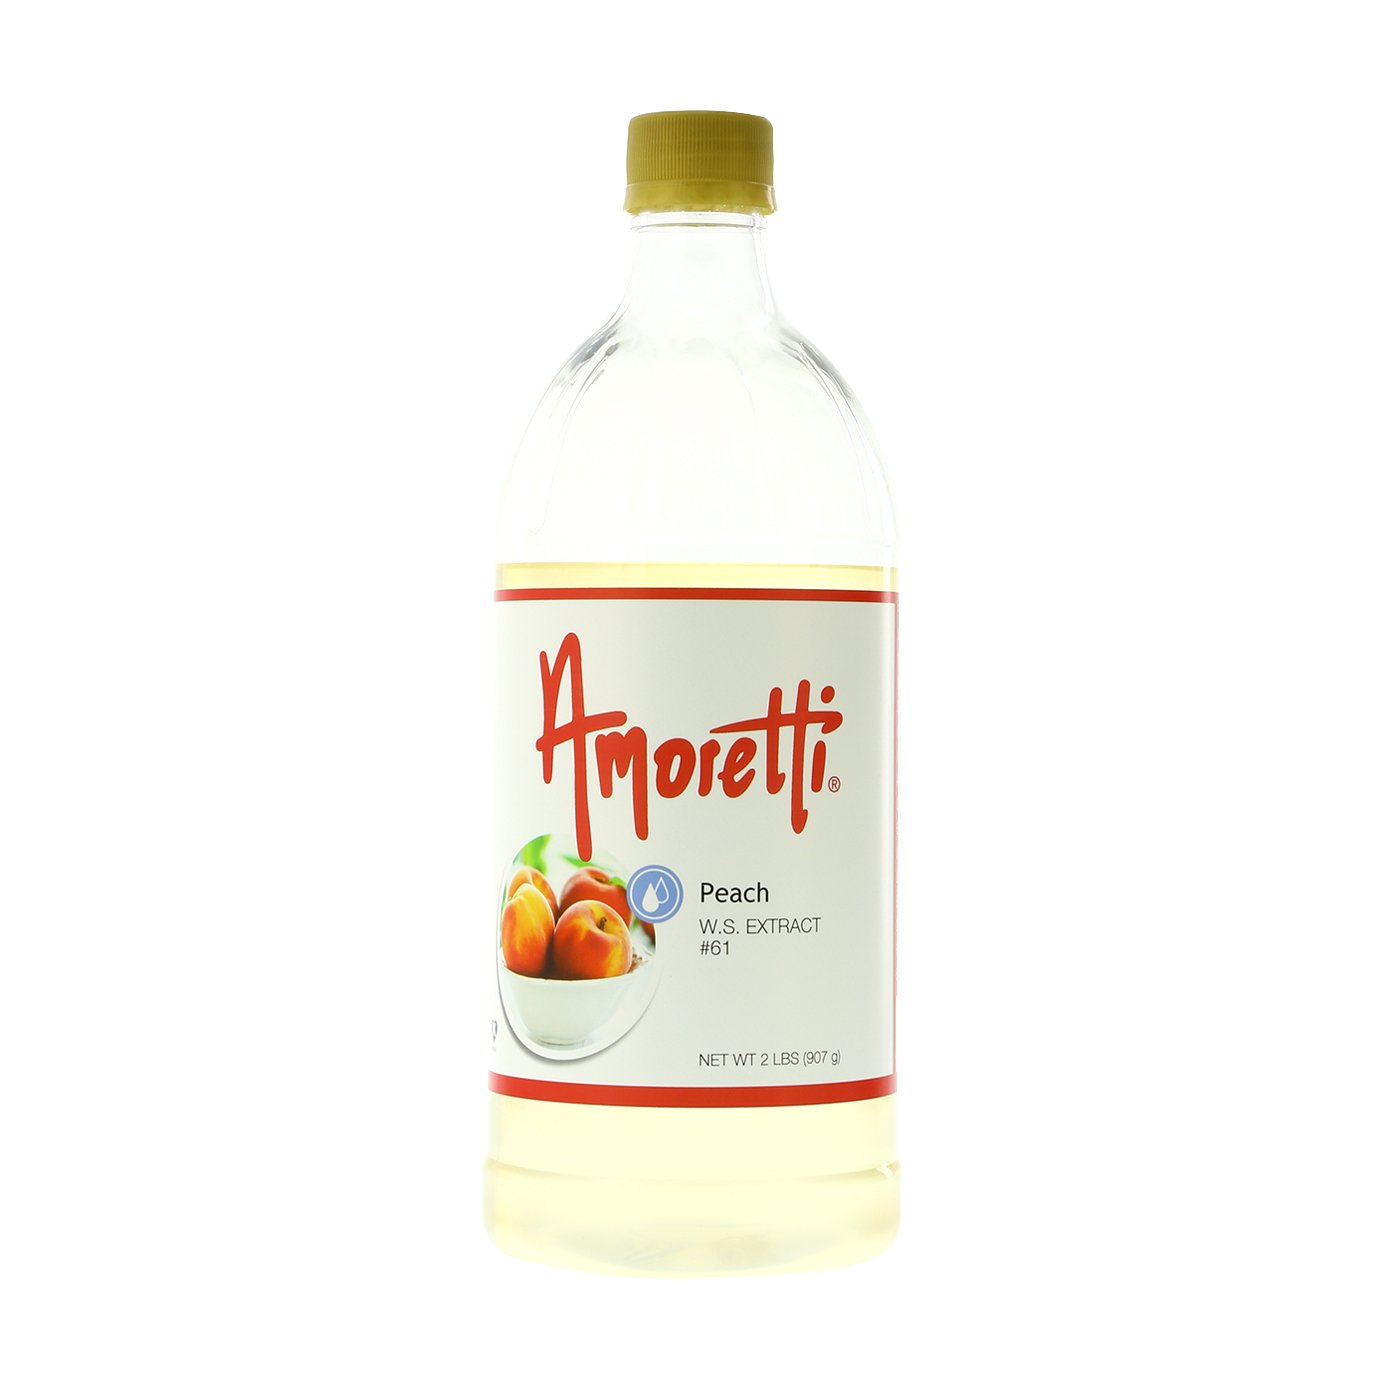 Amoretti Peach Extract W.S.